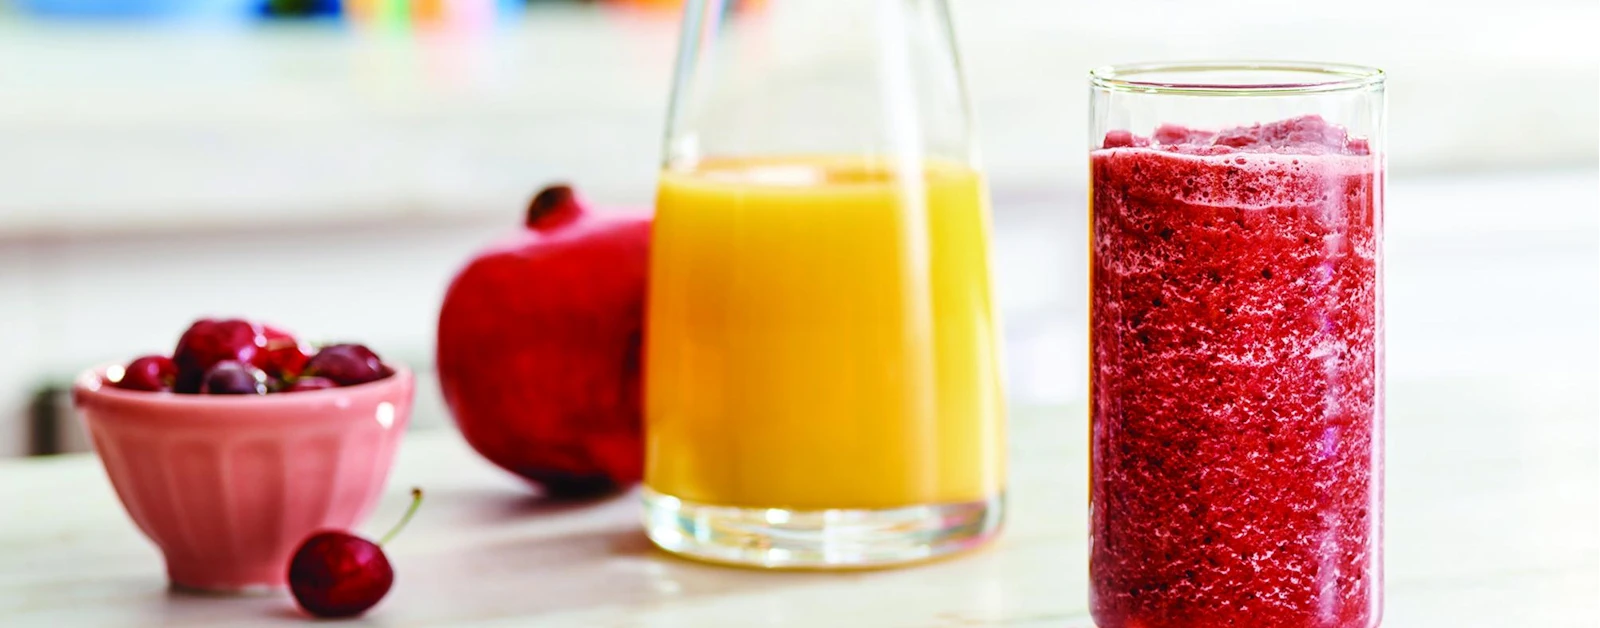 immune system boosting super fruit smoothie recipe with orange juice, pomegranate juice and dark cherries